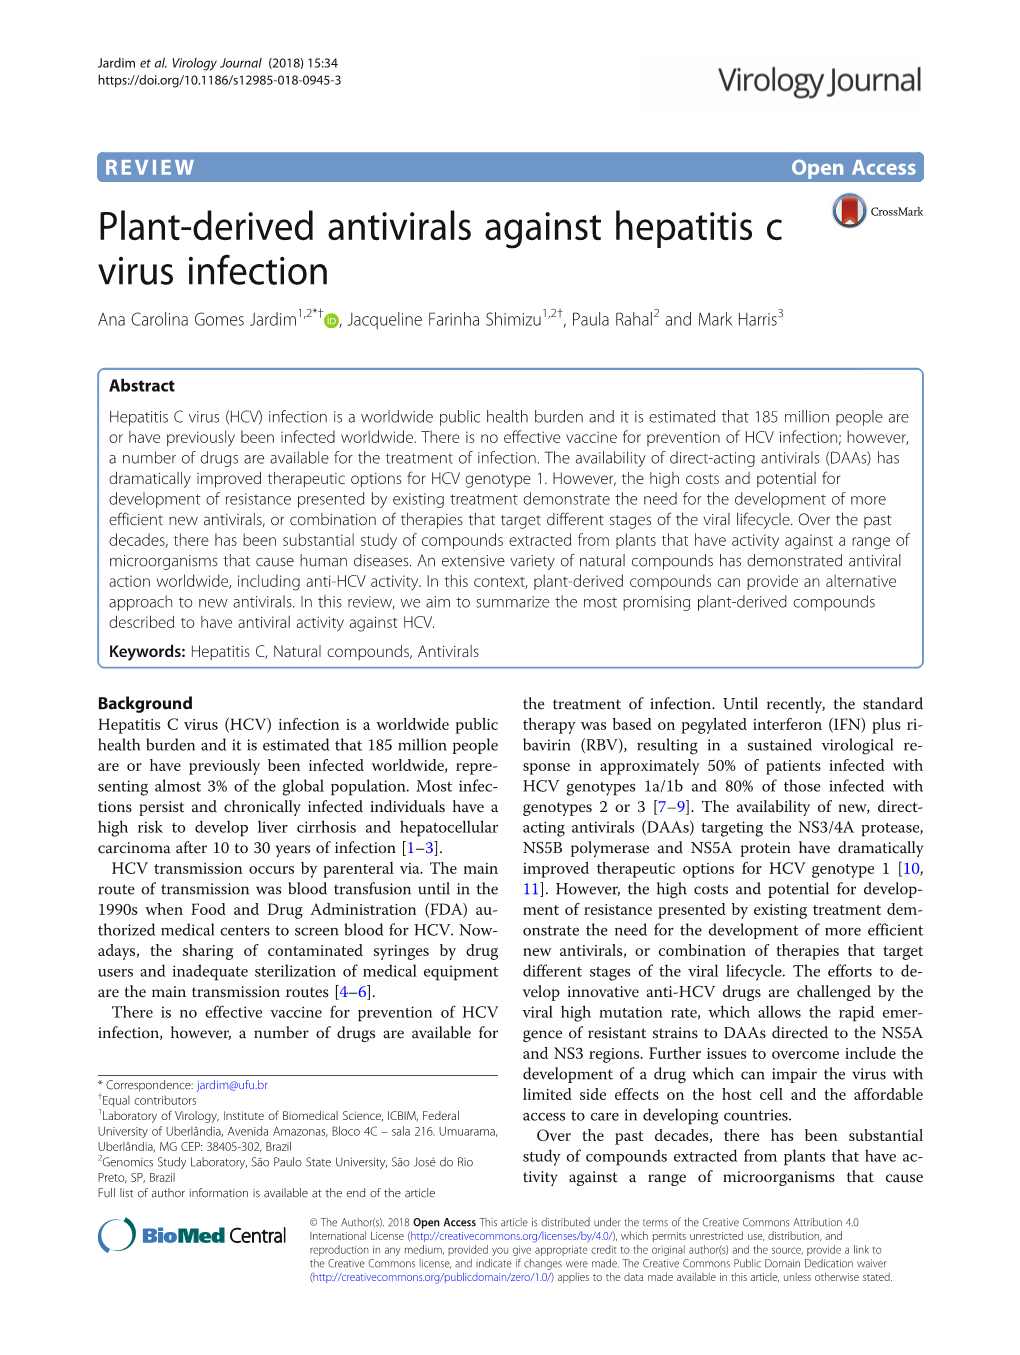 Plant-Derived Antivirals Against Hepatitis C Virus Infection Ana Carolina Gomes Jardim1,2*† , Jacqueline Farinha Shimizu1,2†, Paula Rahal2 and Mark Harris3